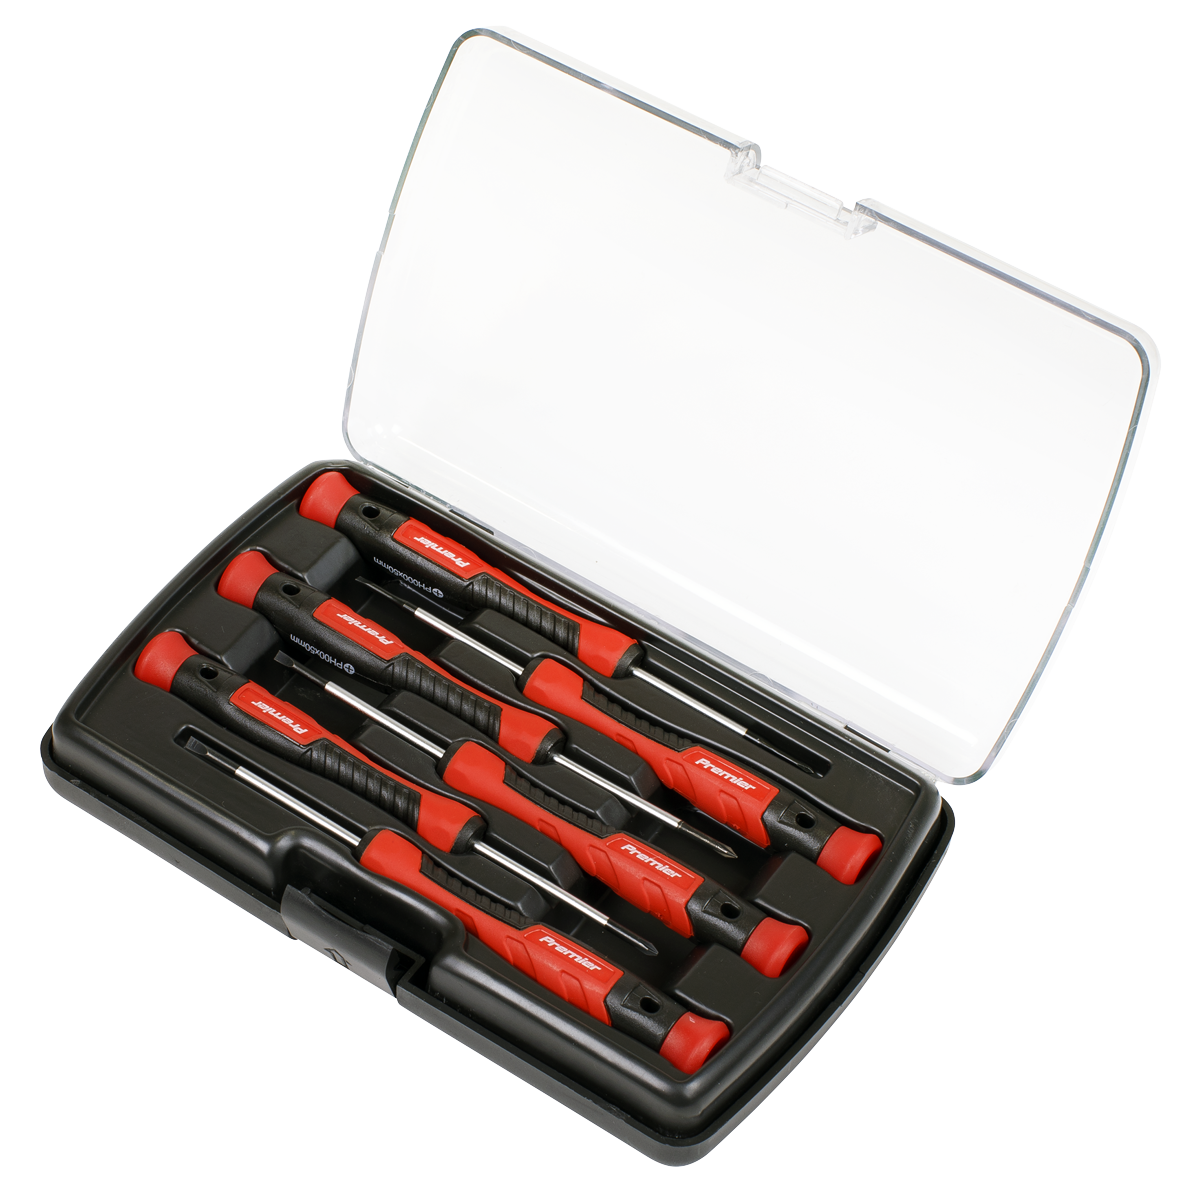 Sealey set of 6 screwdrivers